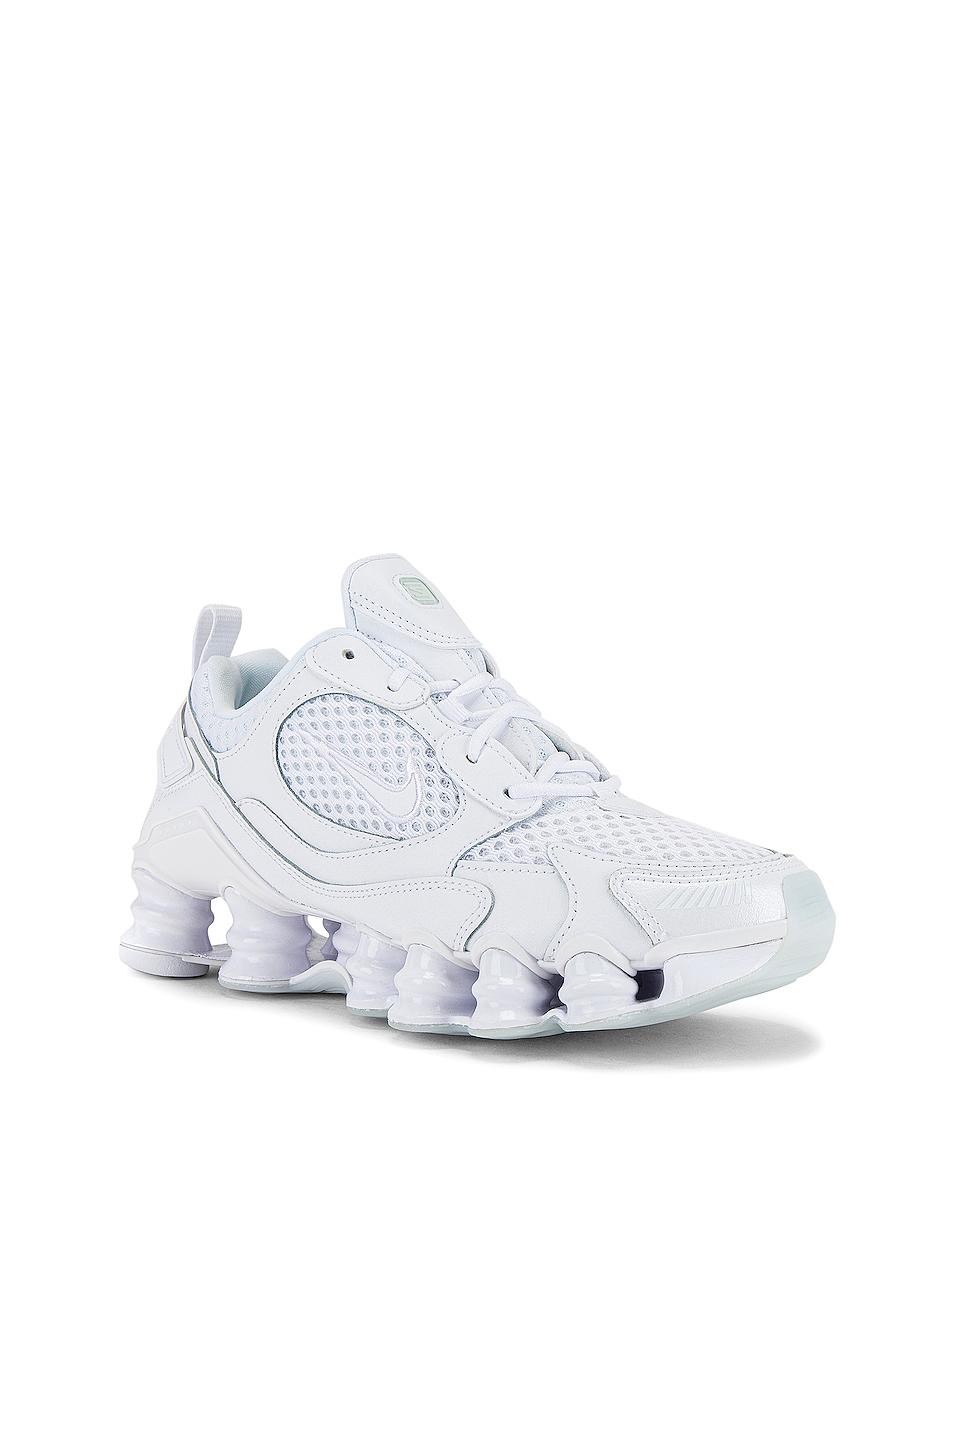 Nike Shox Nova 2 - Shoes in wh/wh (White) | Lyst